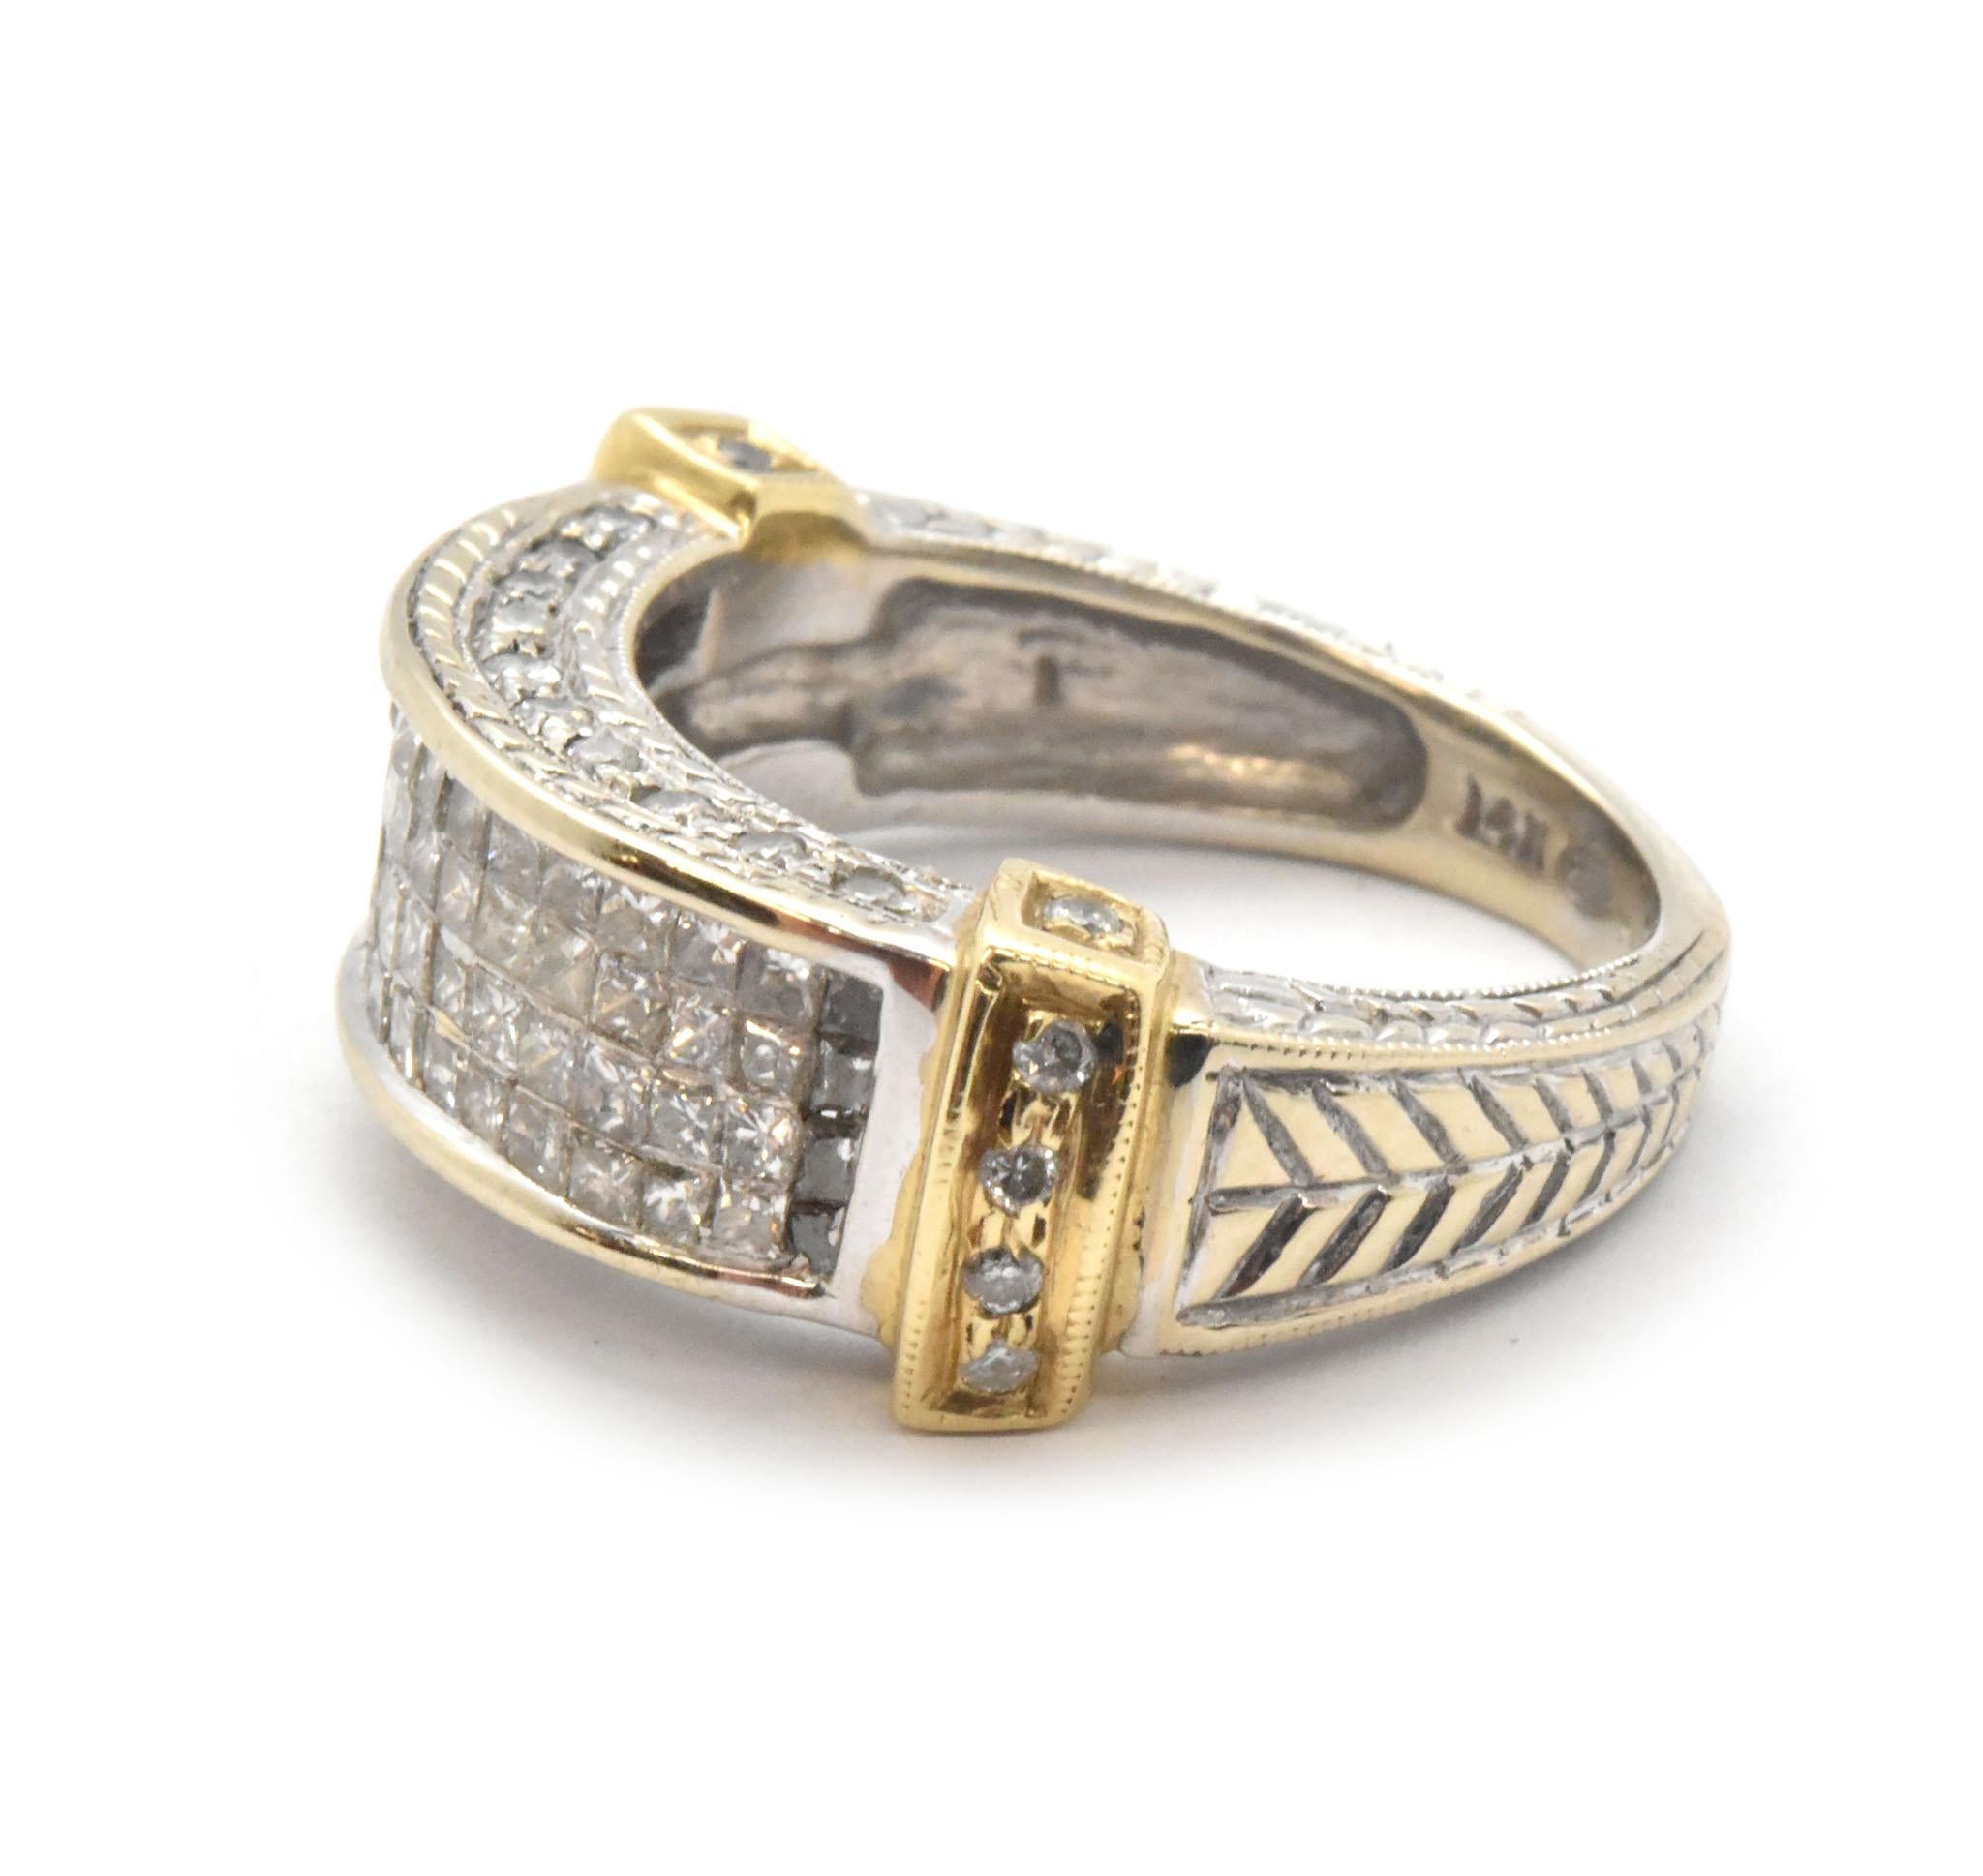 Princess Cut Two-Tone 14 Karat Gold and Invisible Set of Diamond Band Ring 1.28 Carat